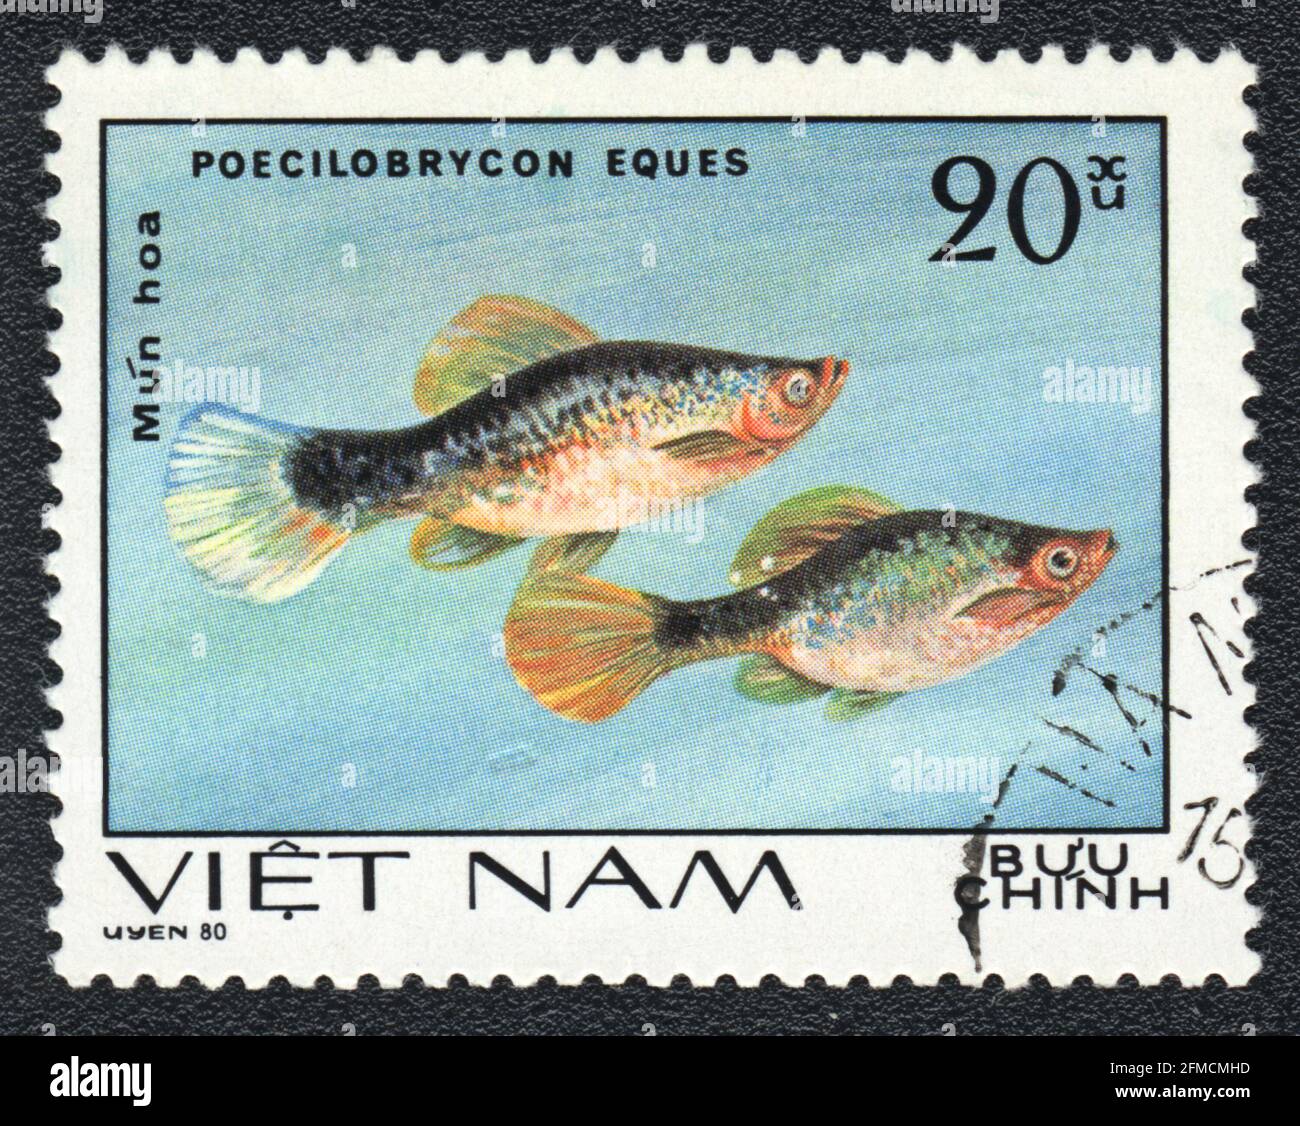 A postage stamp shows a Aquarium fishes Brown pencilfish (Poecilobrycon eques),  series 'Aquarium Fish', Vietnam, 1980 Stock Photo